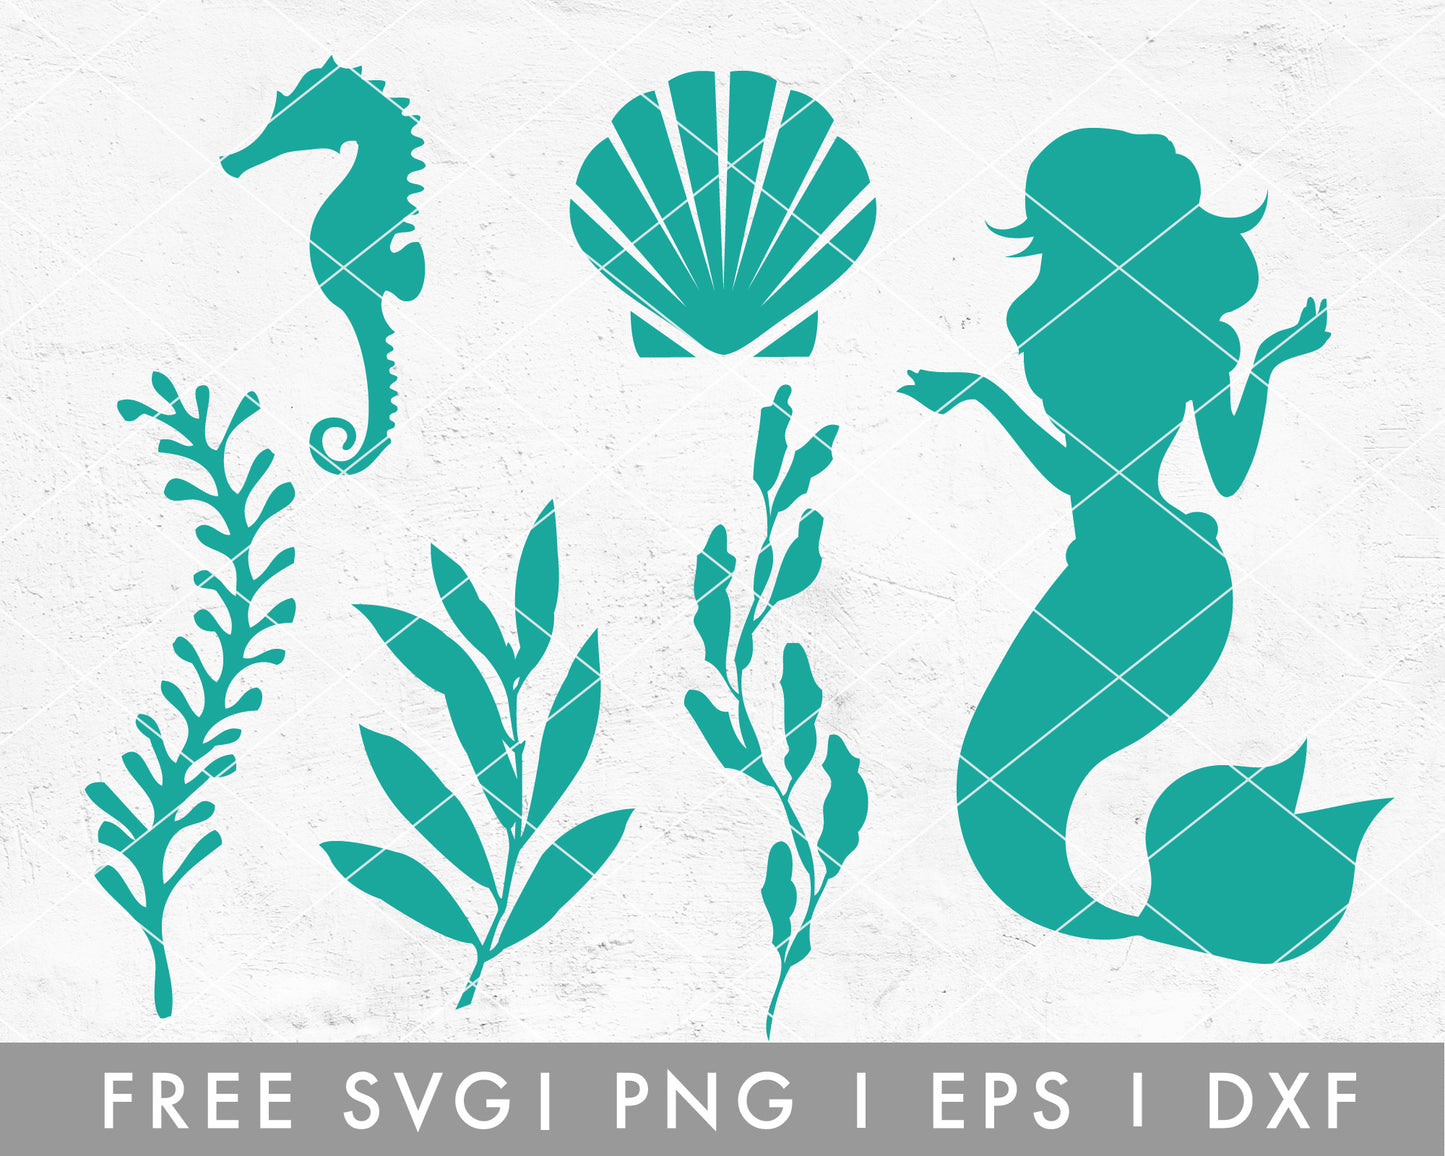 FREE FREE Mermaid SVG | Mermaid Silhouette SVG Cut File for Cricut, Cameo Silhouette | Free SVG Cut File